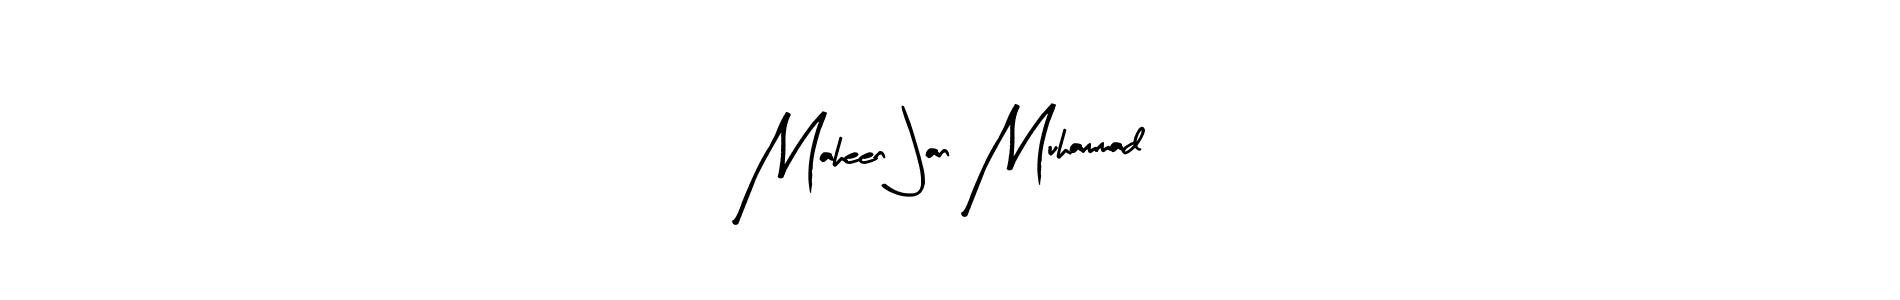 How to Draw Maheen Jan Muhammad signature style? Arty Signature is a latest design signature styles for name Maheen Jan Muhammad. Maheen Jan Muhammad signature style 8 images and pictures png